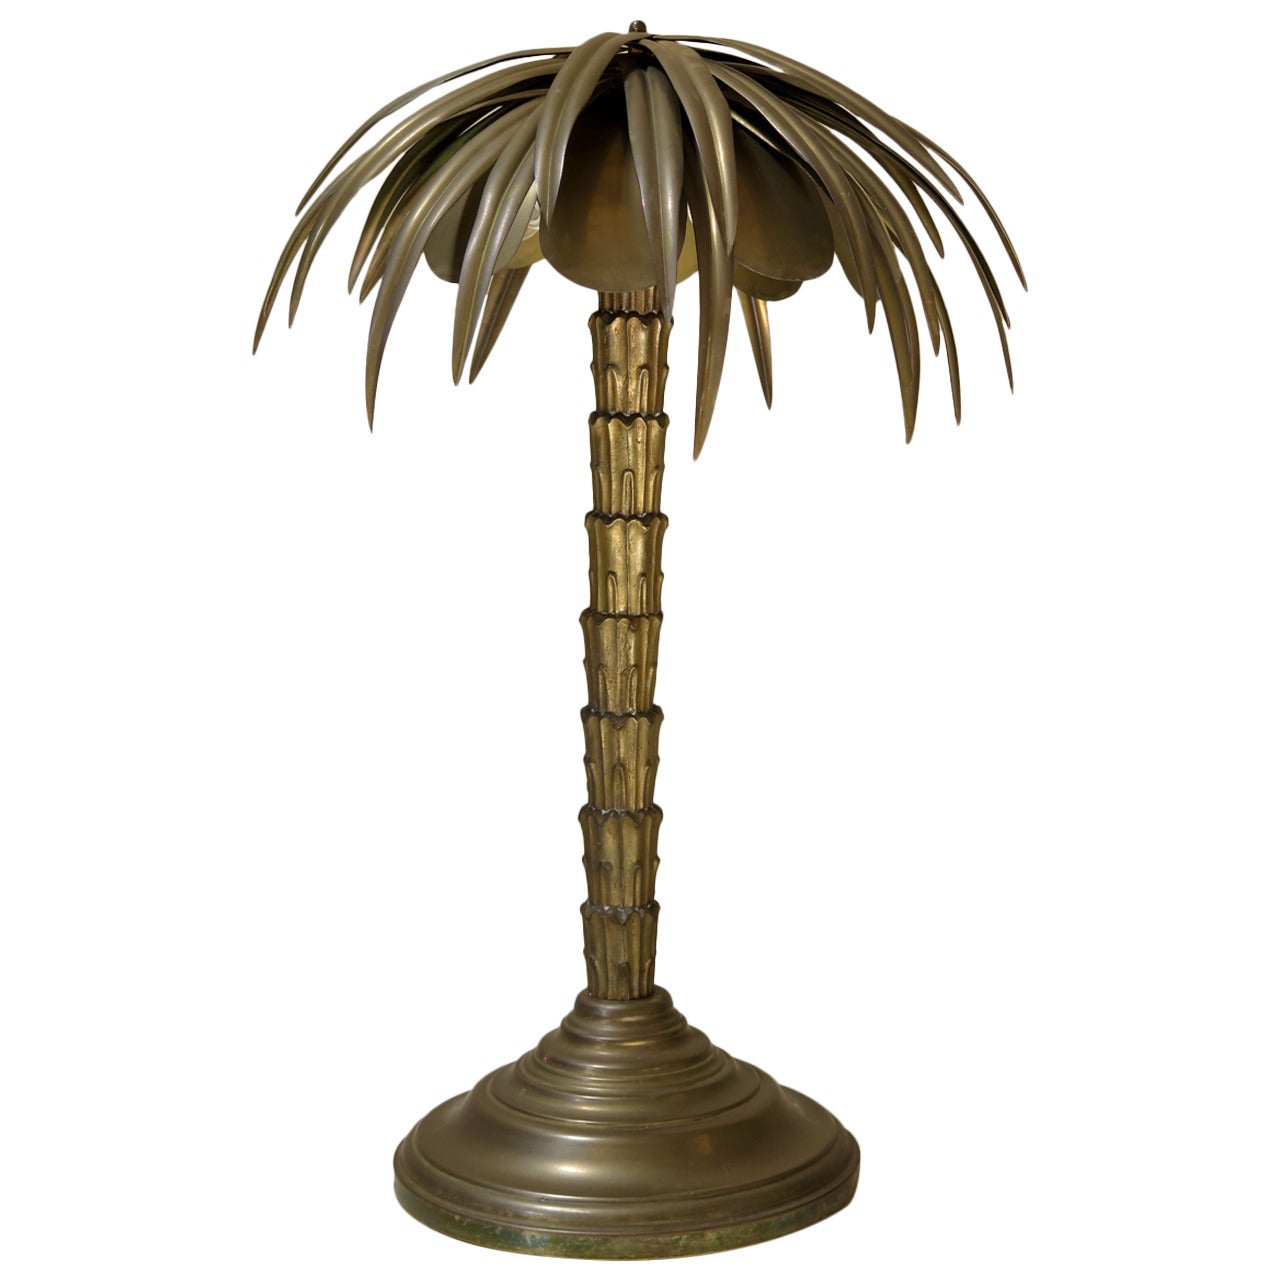 Heavy Brass Palm Tree Lamp, France circa 1900s